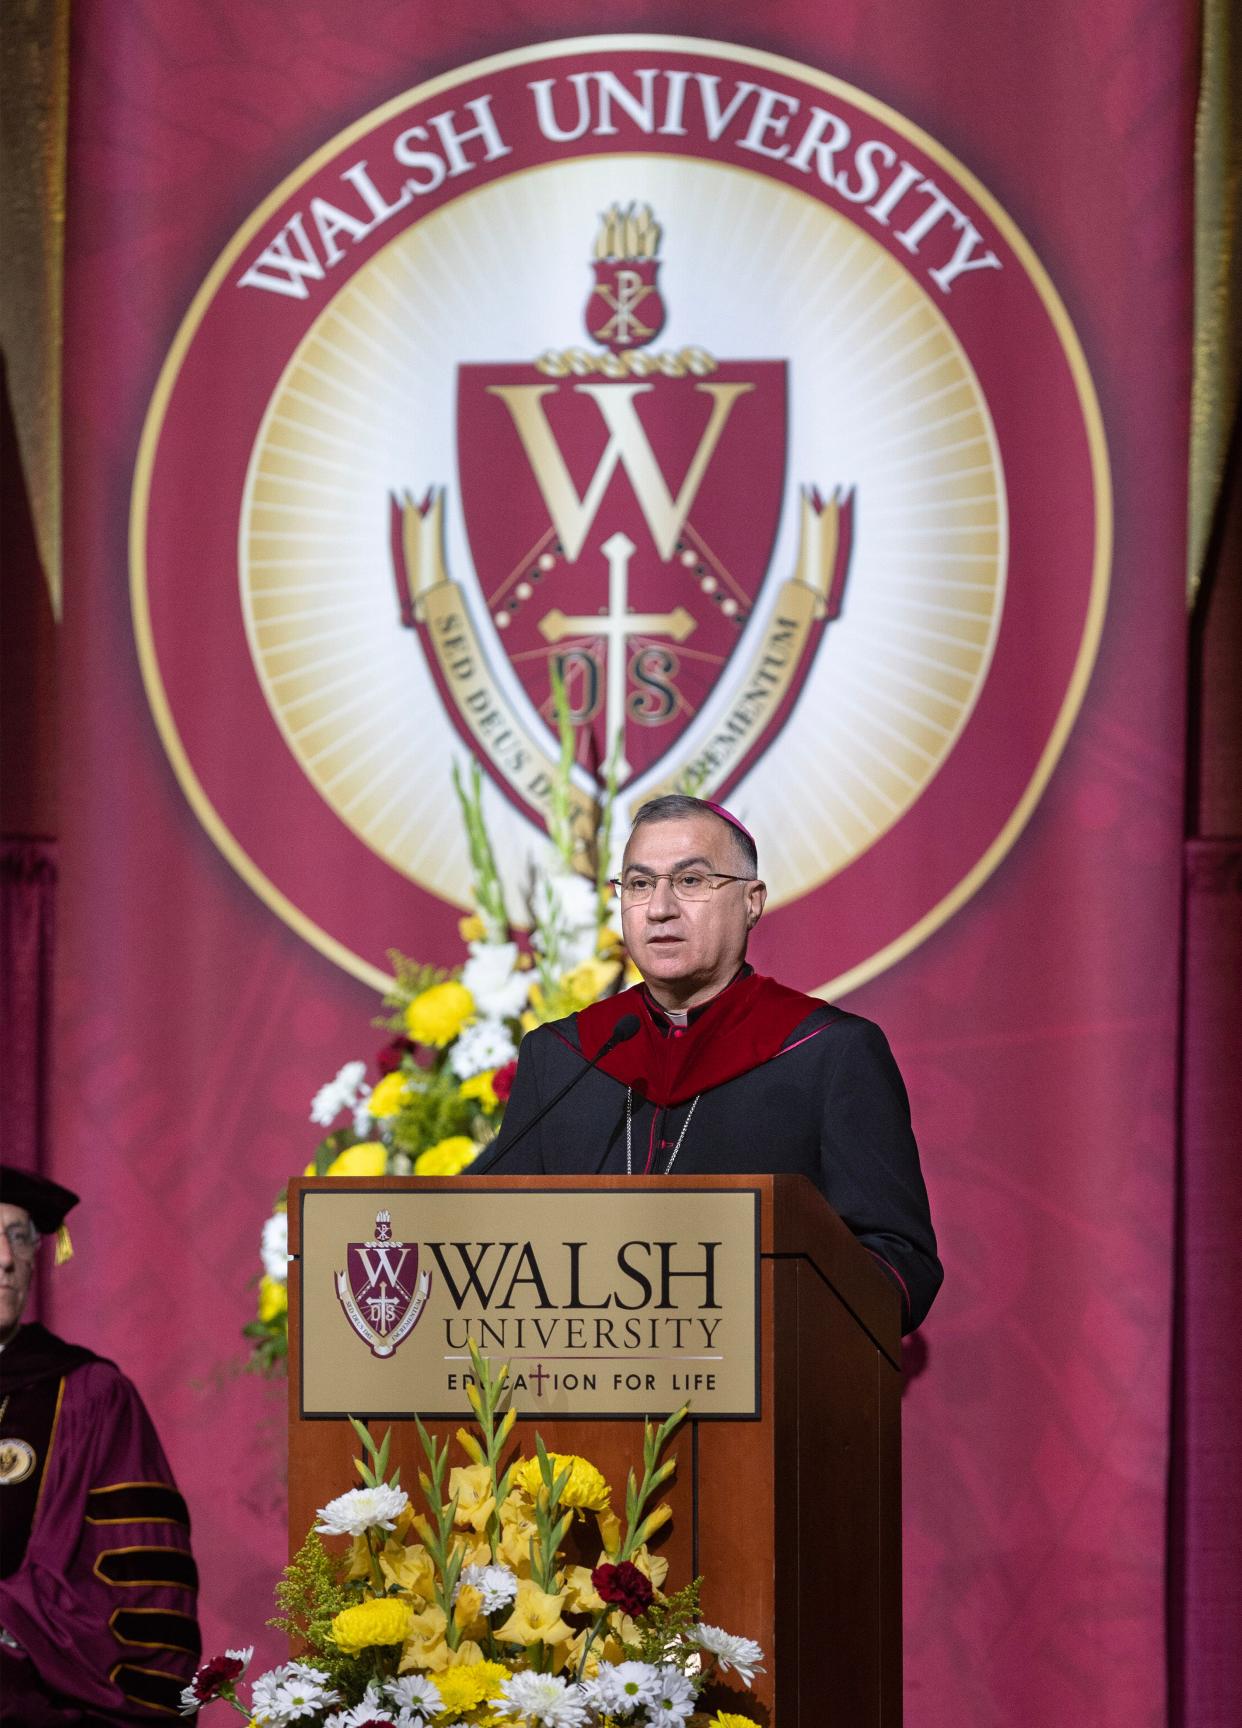 Catholic Archbishop Bashar Matti Warda of Irbil, Iraq, speaks at the Walsh University commencement in North Canton on Saturday.